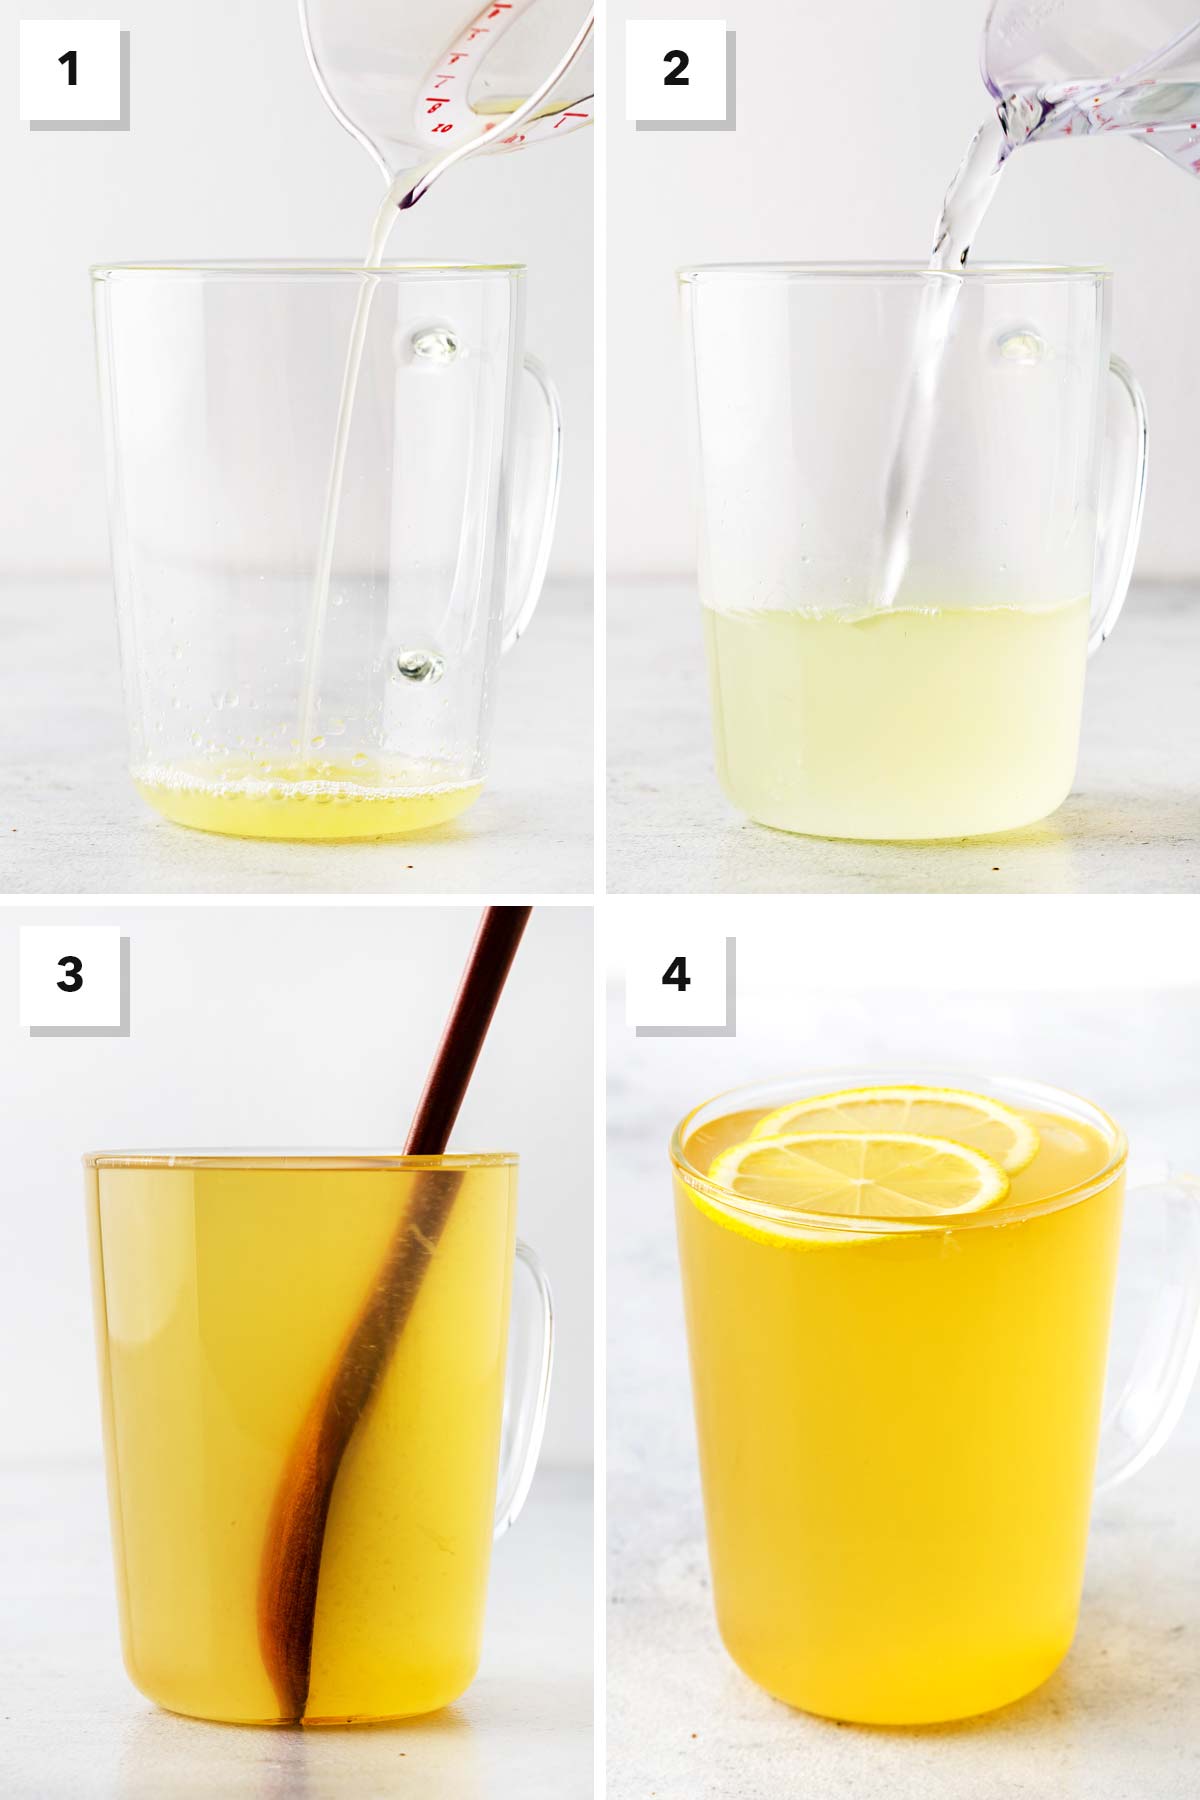 Steps to make Lemon Tea.